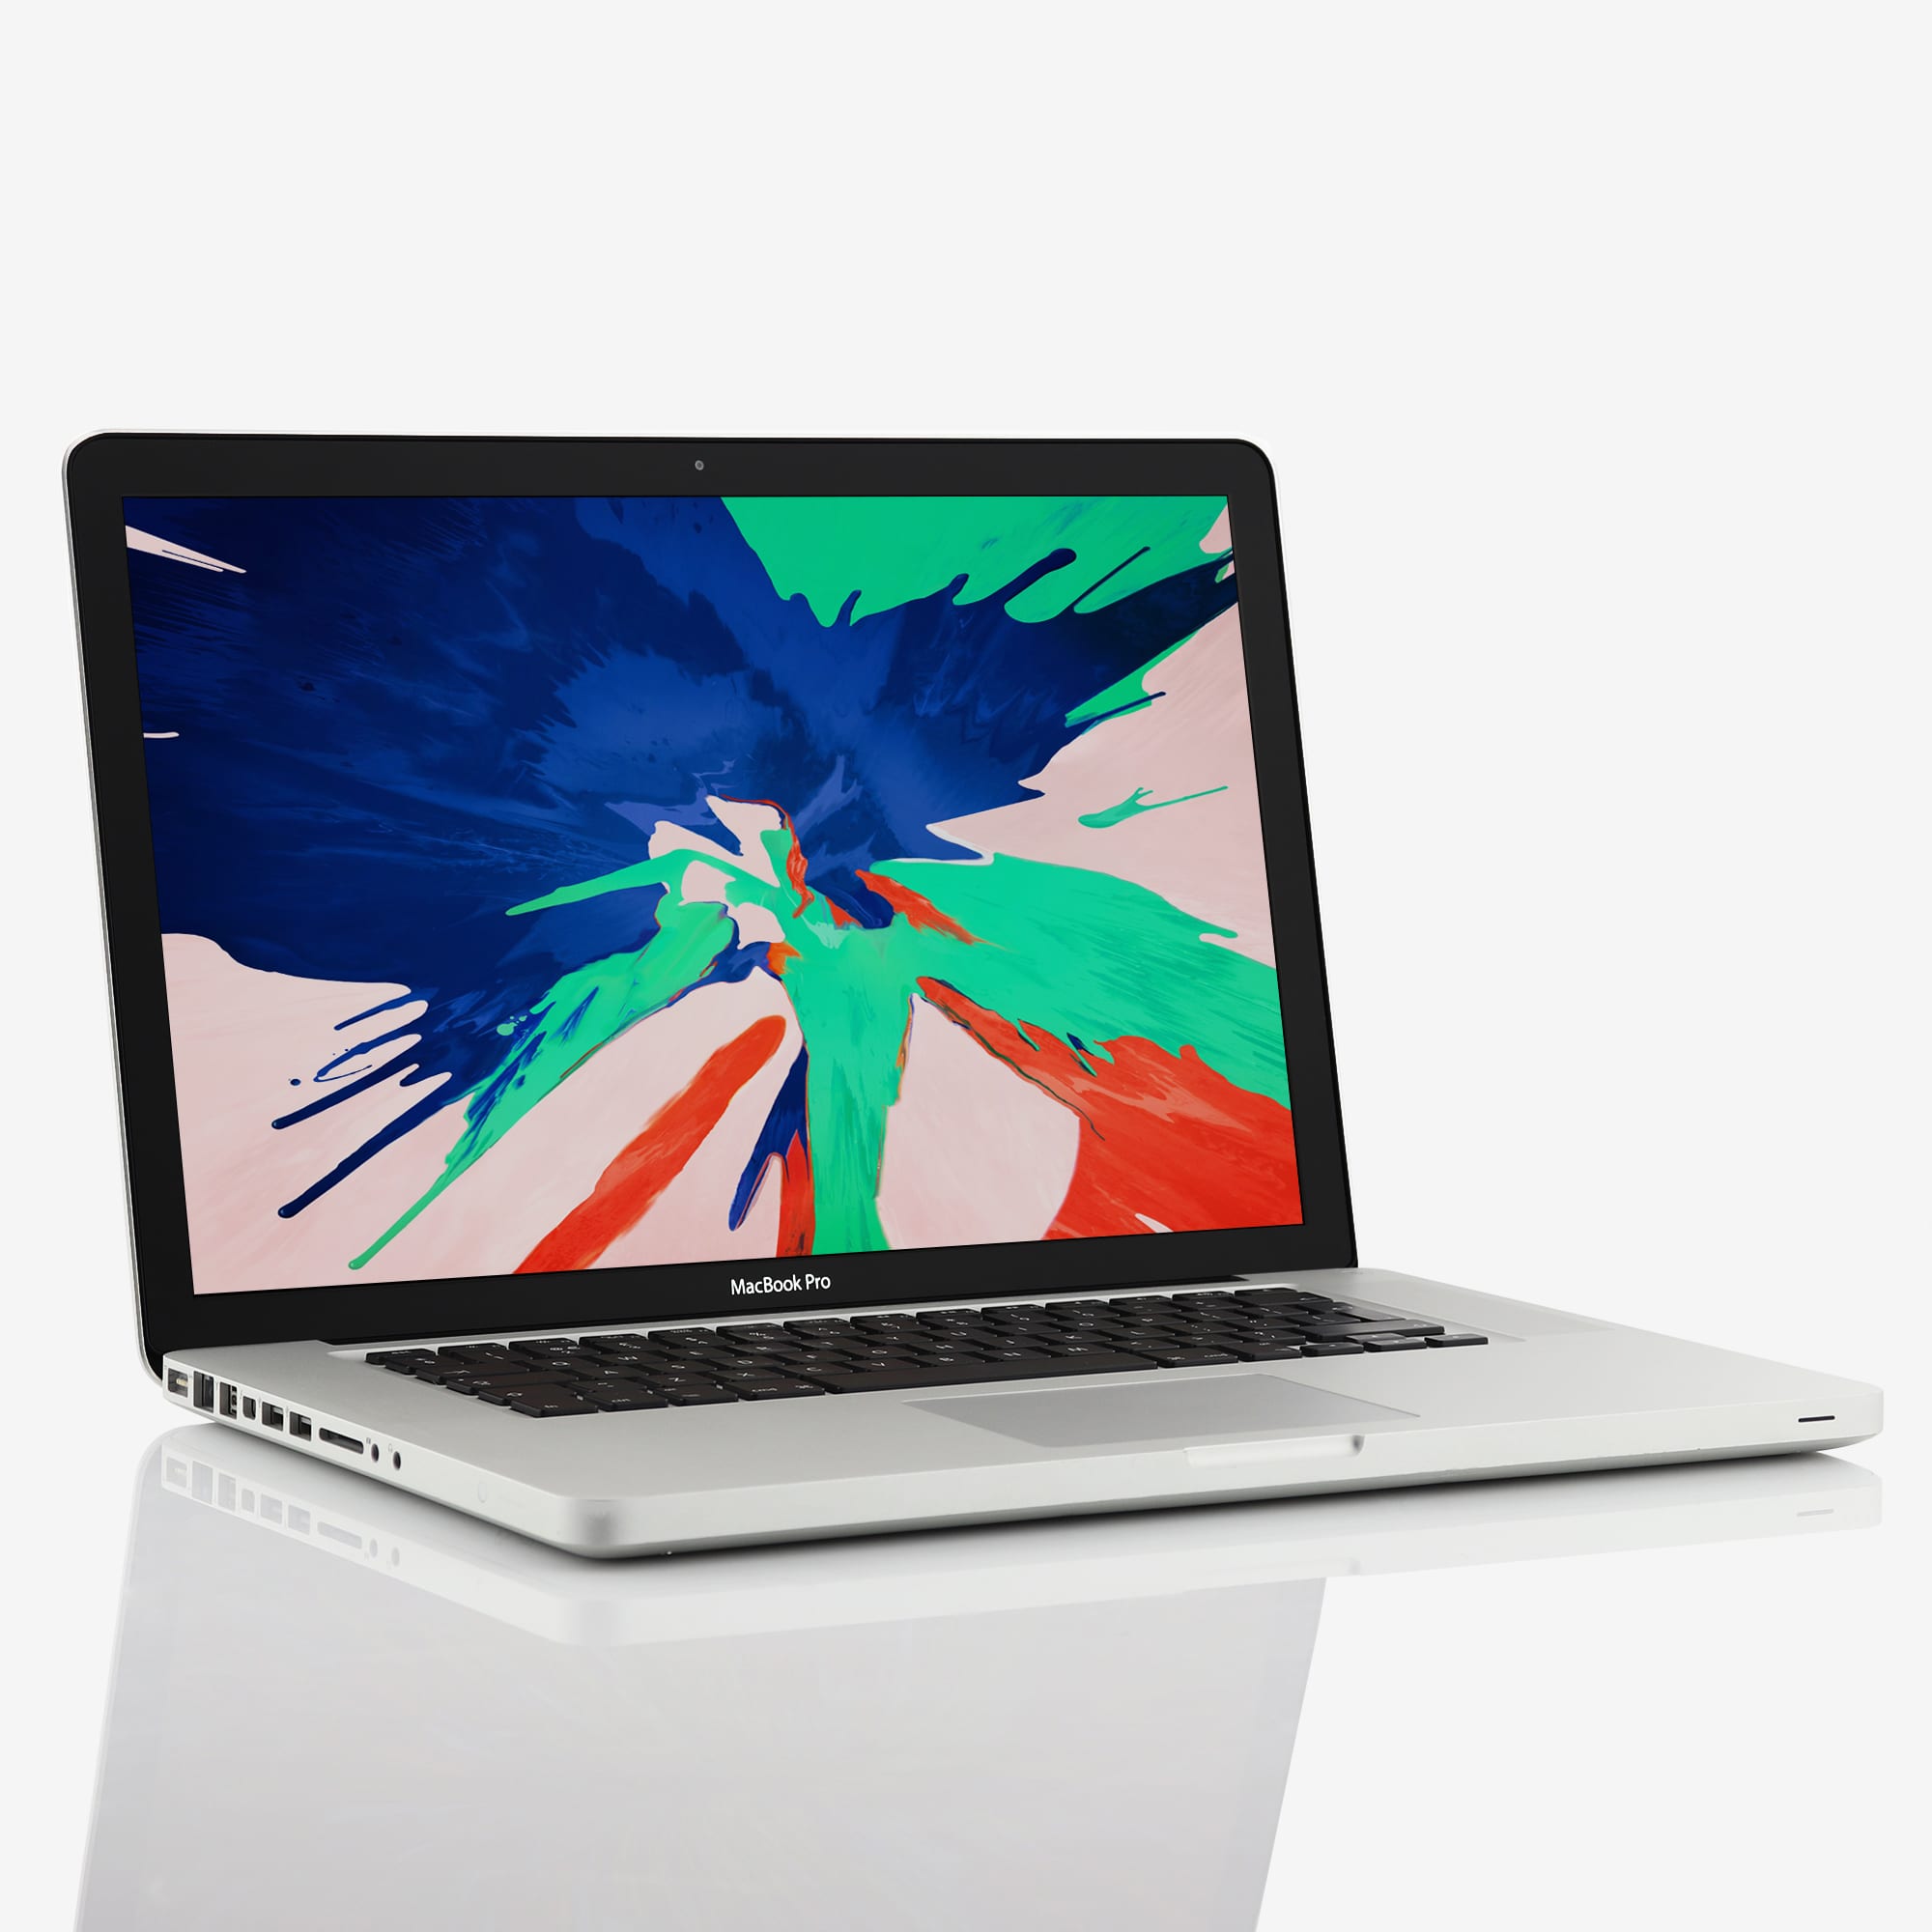 1 x Apple MacBook Pro 15 Inch Intel Core i7 2.70 GHz (2012)